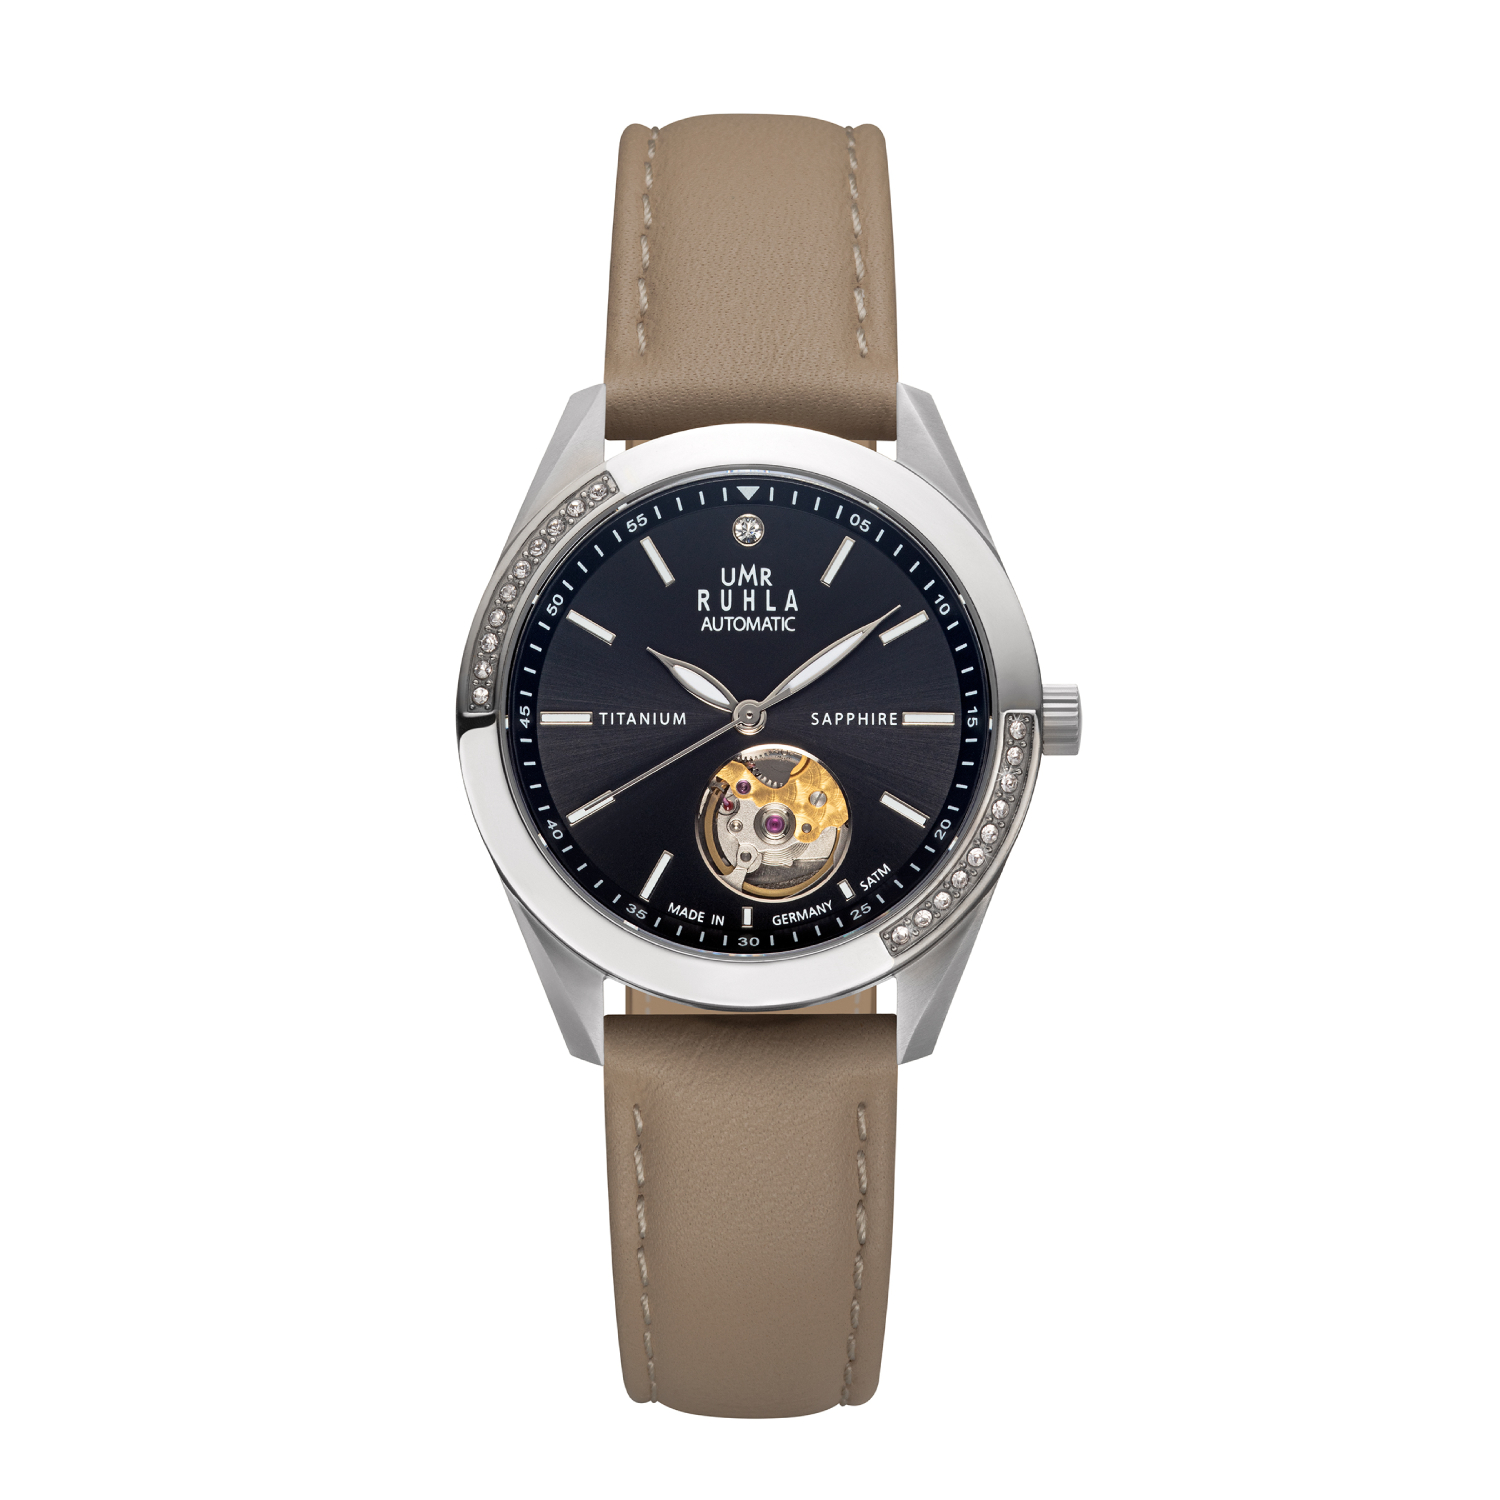 Uhren Manufaktur Ruhla - automatic wristwatch - brown leather strap